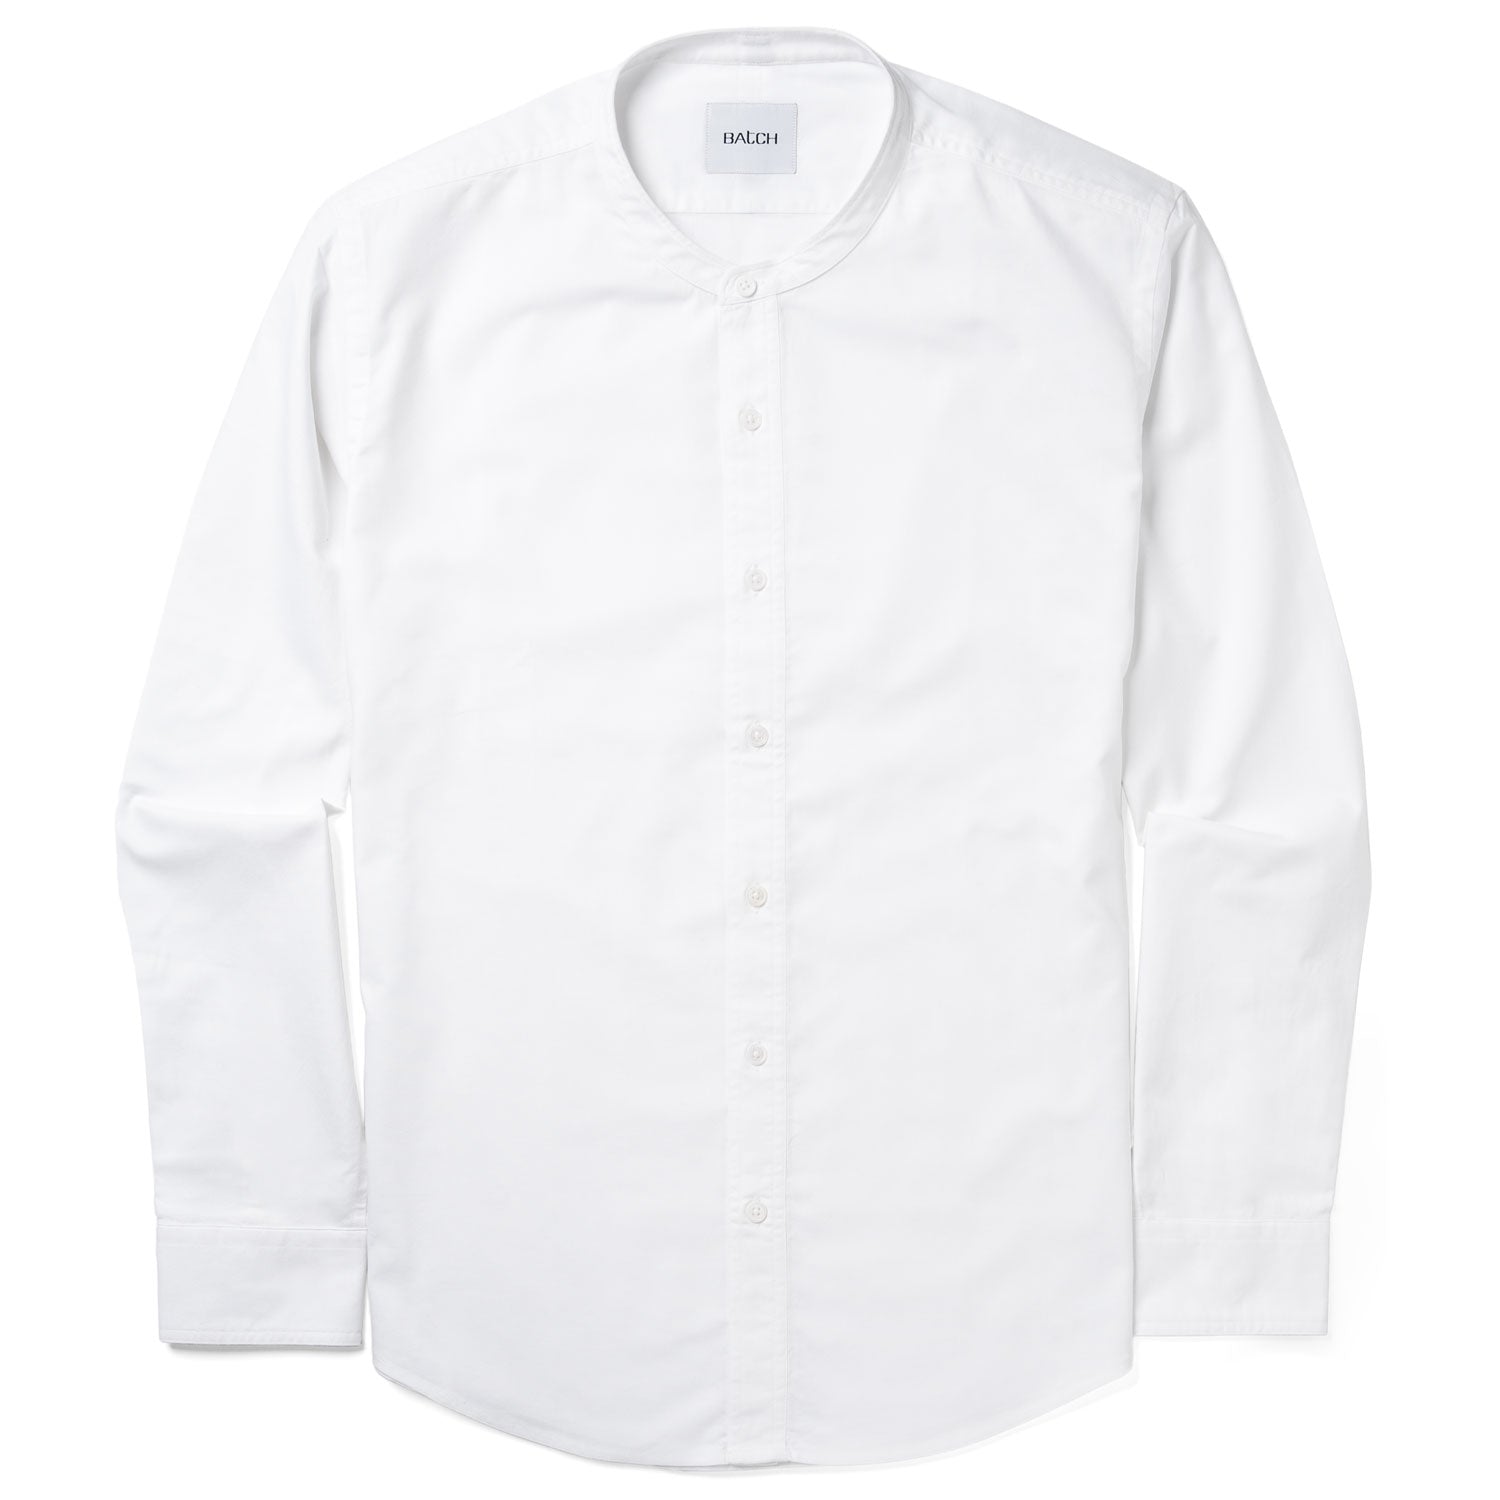 Essential Band Collar Button Down Shirt - Pure White Cotton Oxford